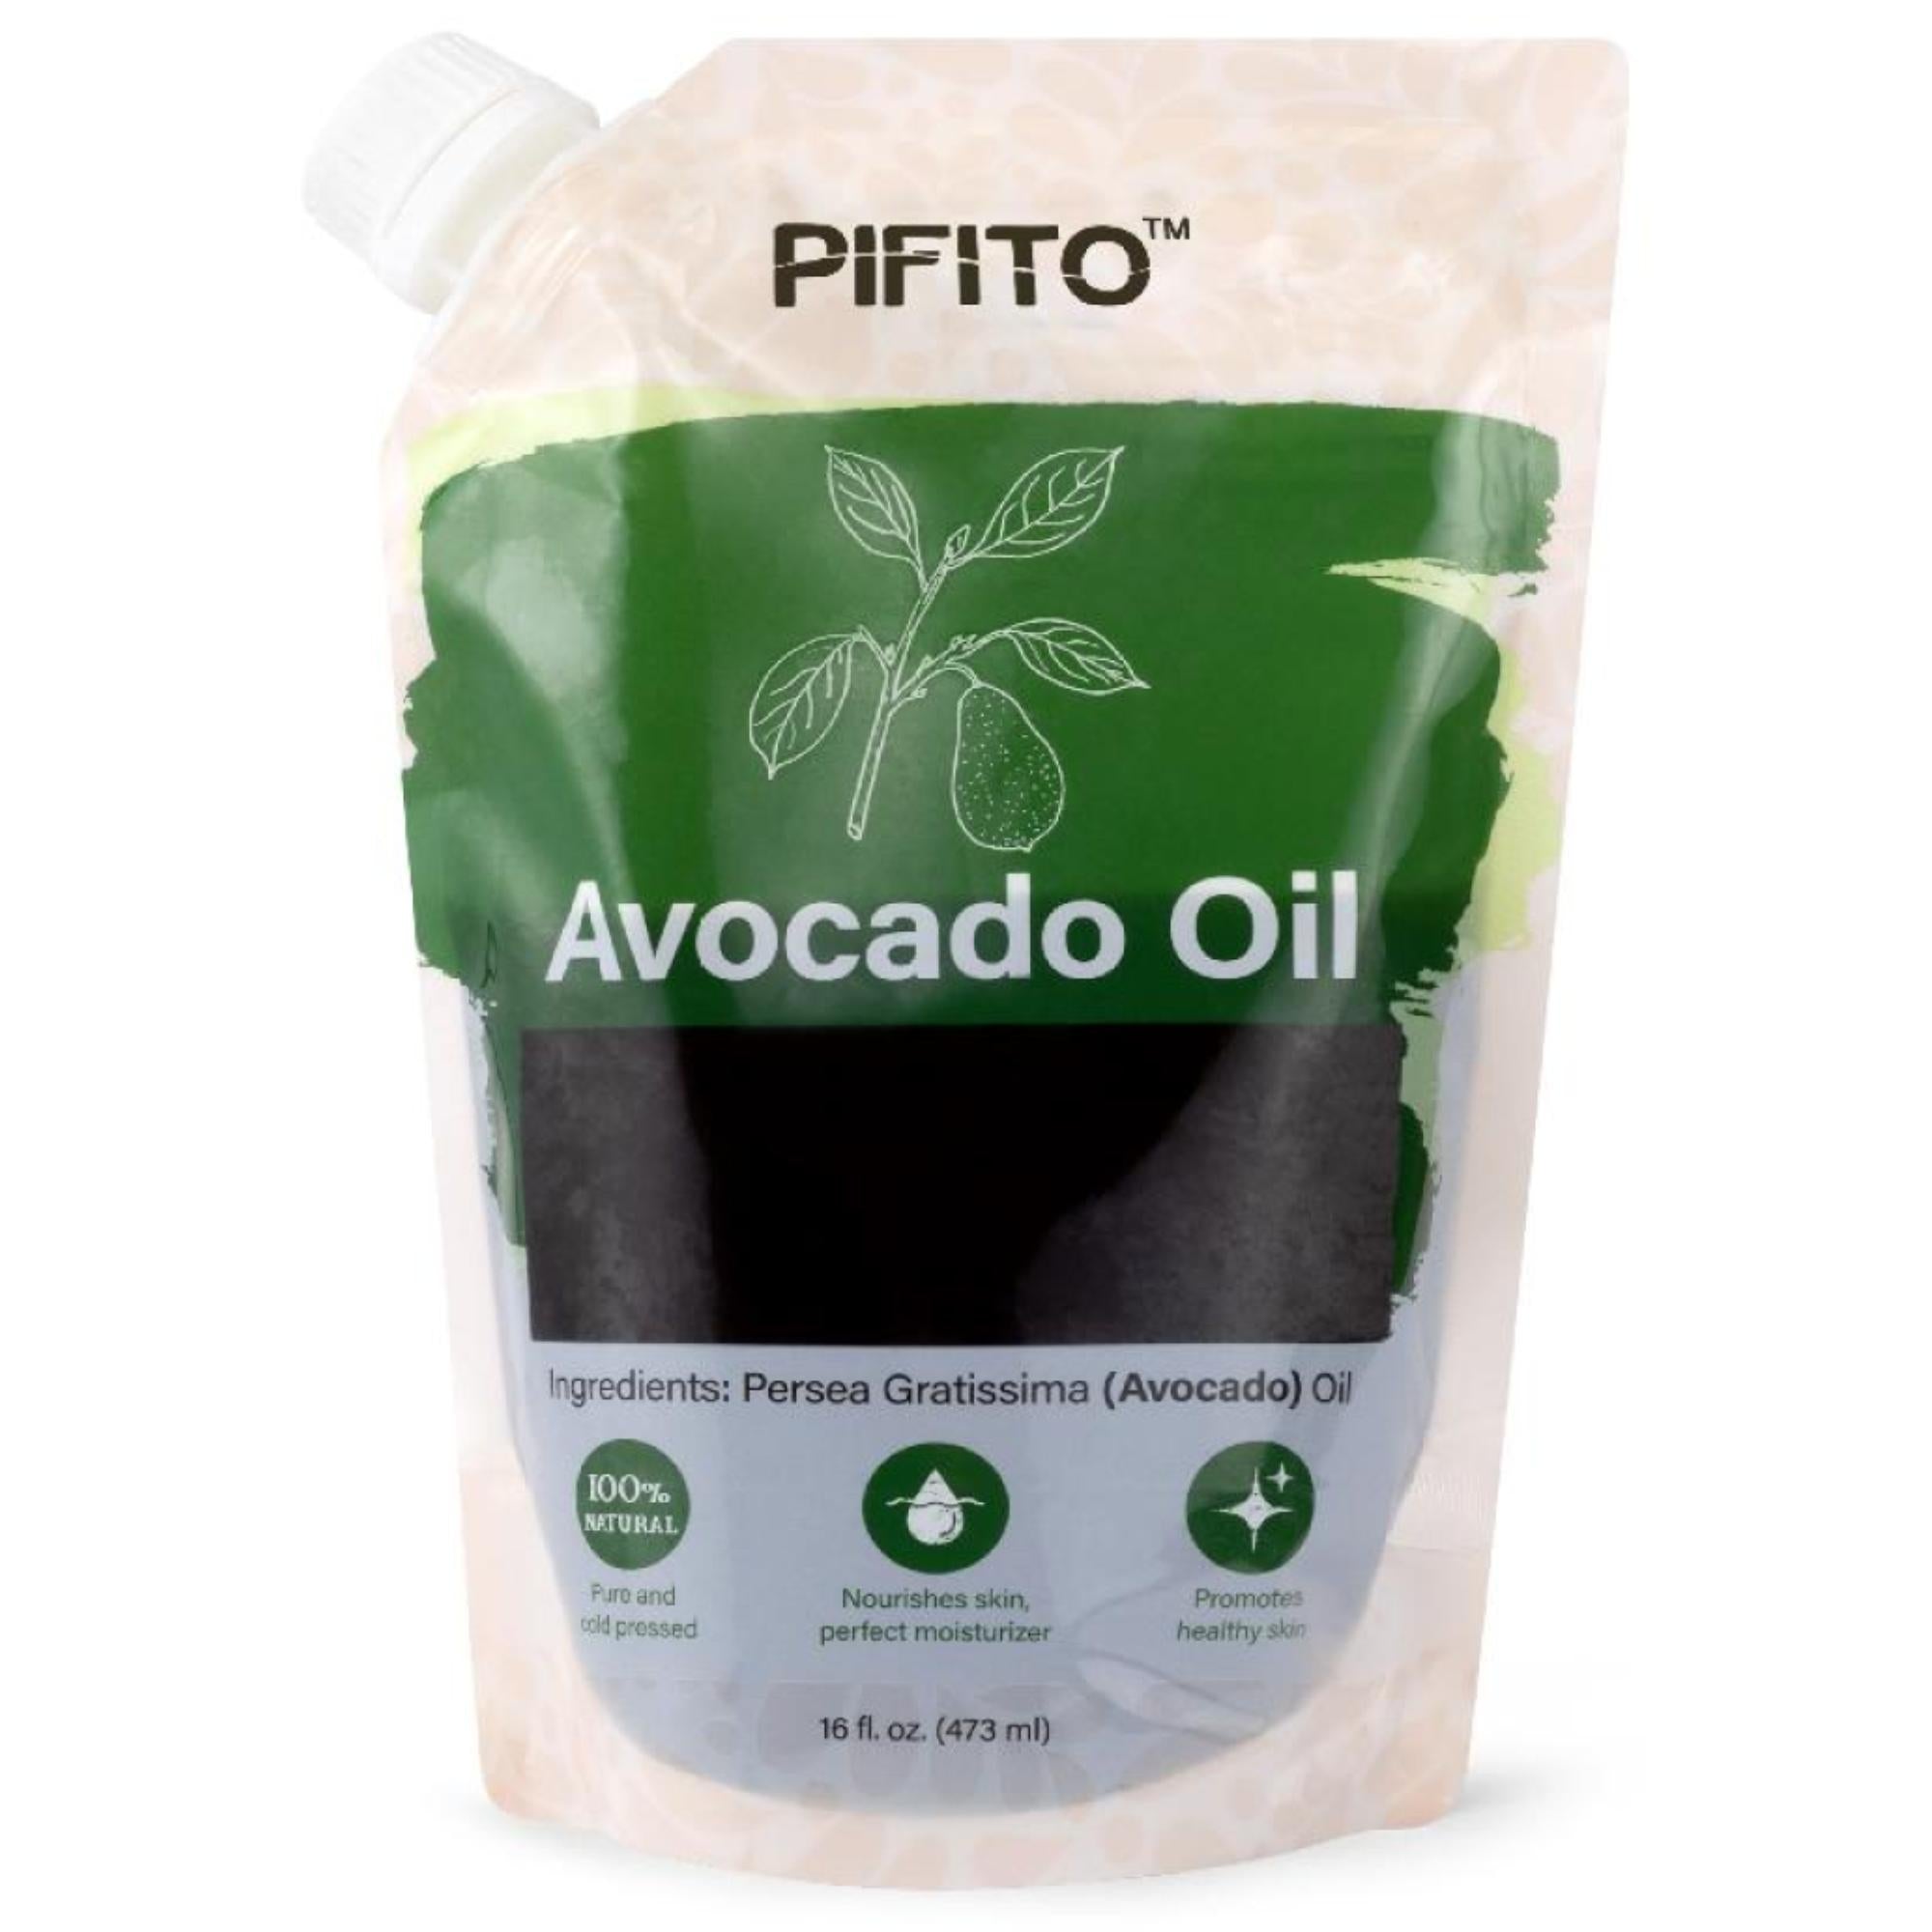  Pifito Soap Making Oils Mix No. 1 │ 60 Oz Quick Mix